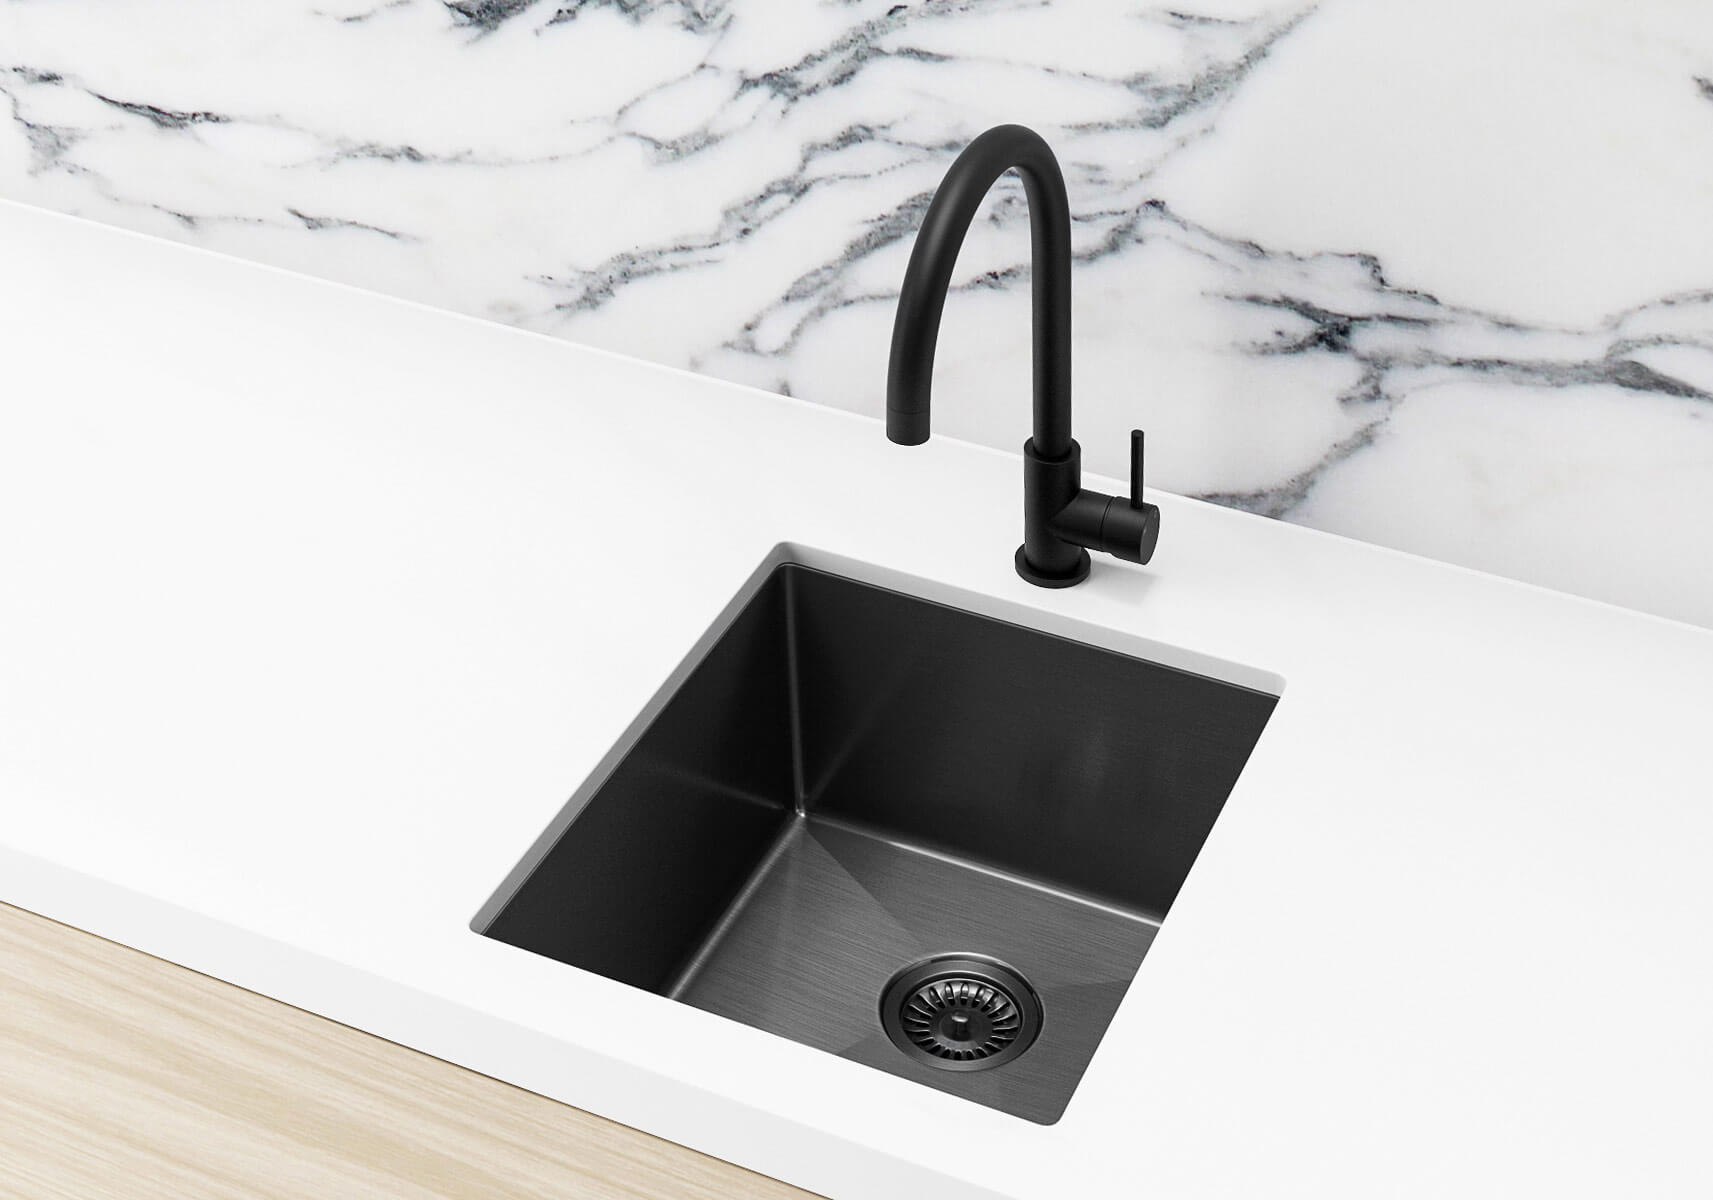 silgranit kitchen sink 33x22x9 single bowl